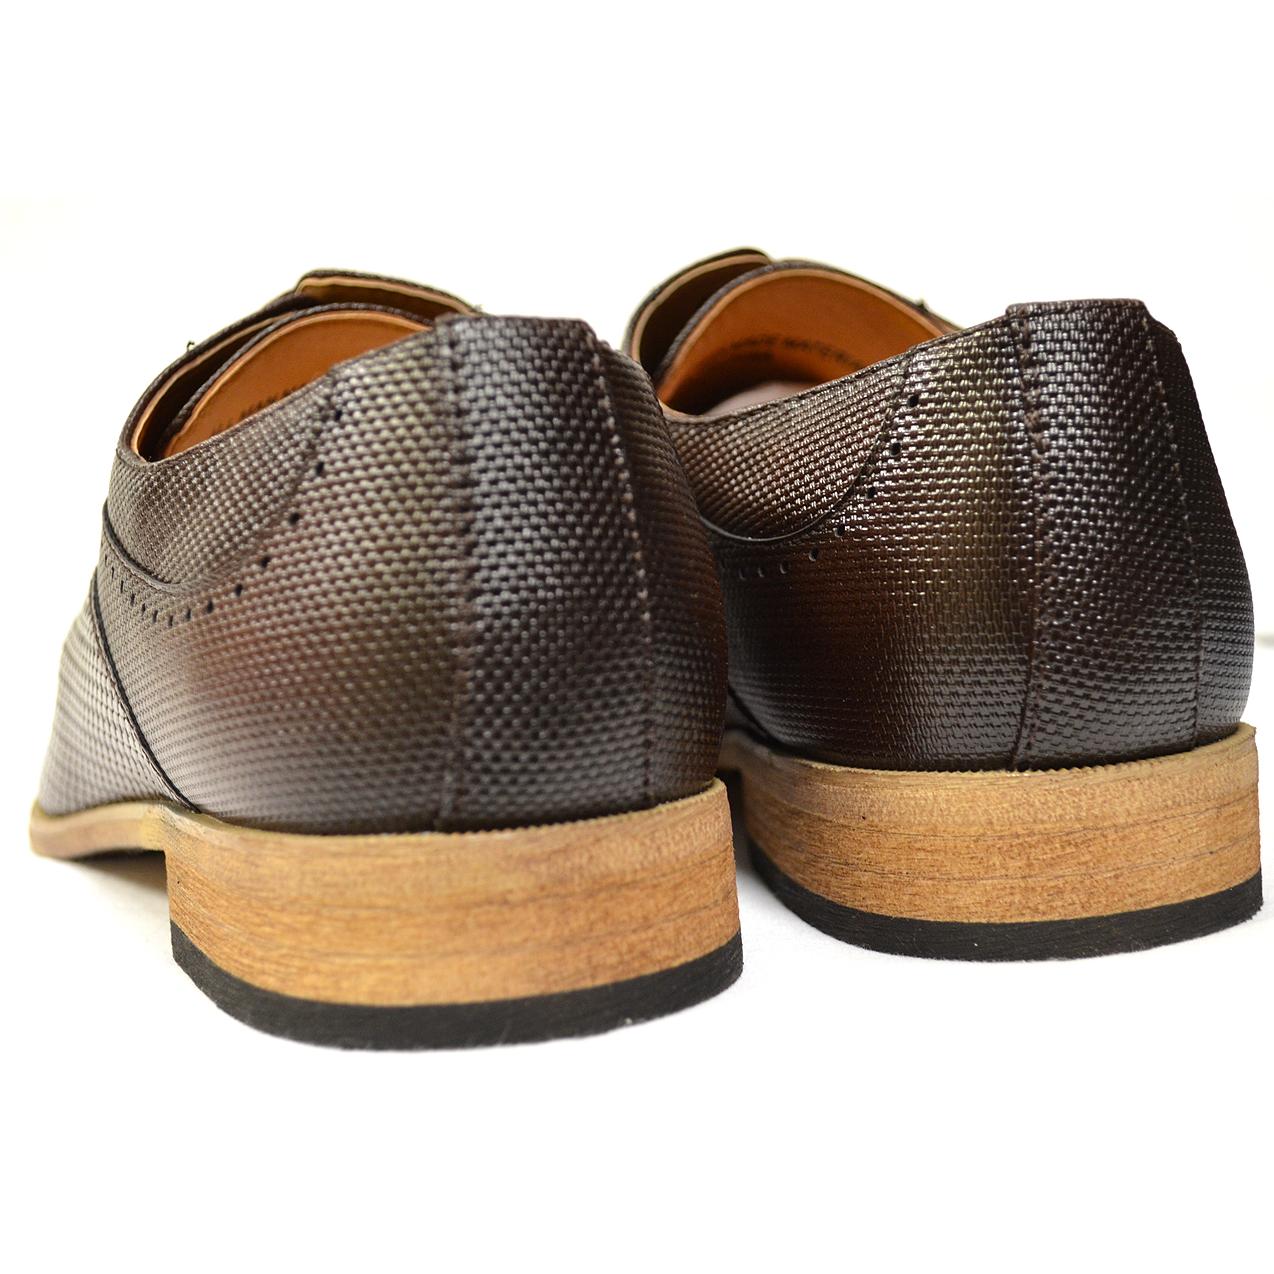 Antonio Cerrelli Brown Woven Leather Cap Toe Oxford Shoes | Men's Cap ...